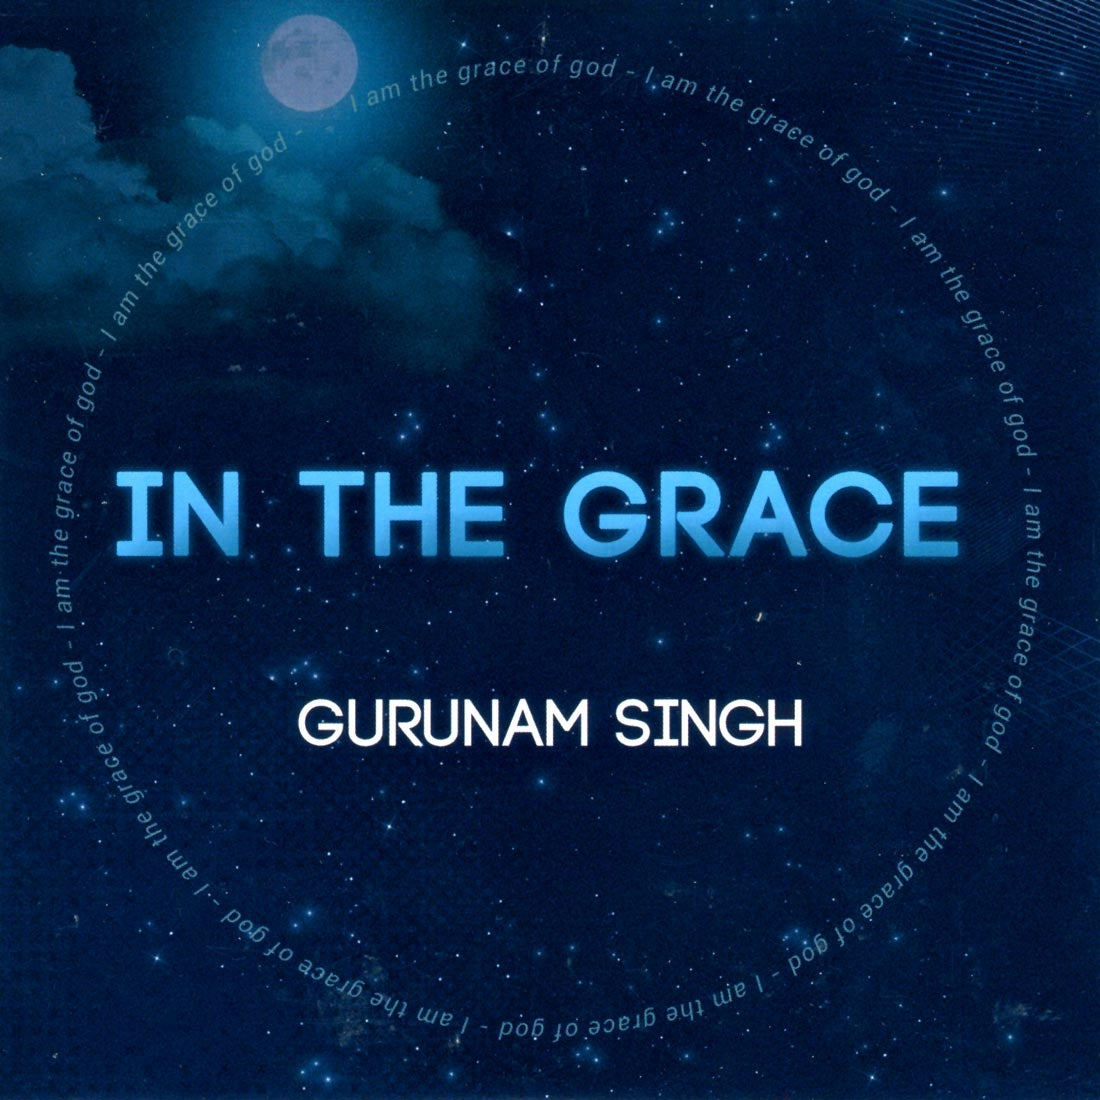 In The Grace - Gurunam Singh komplett